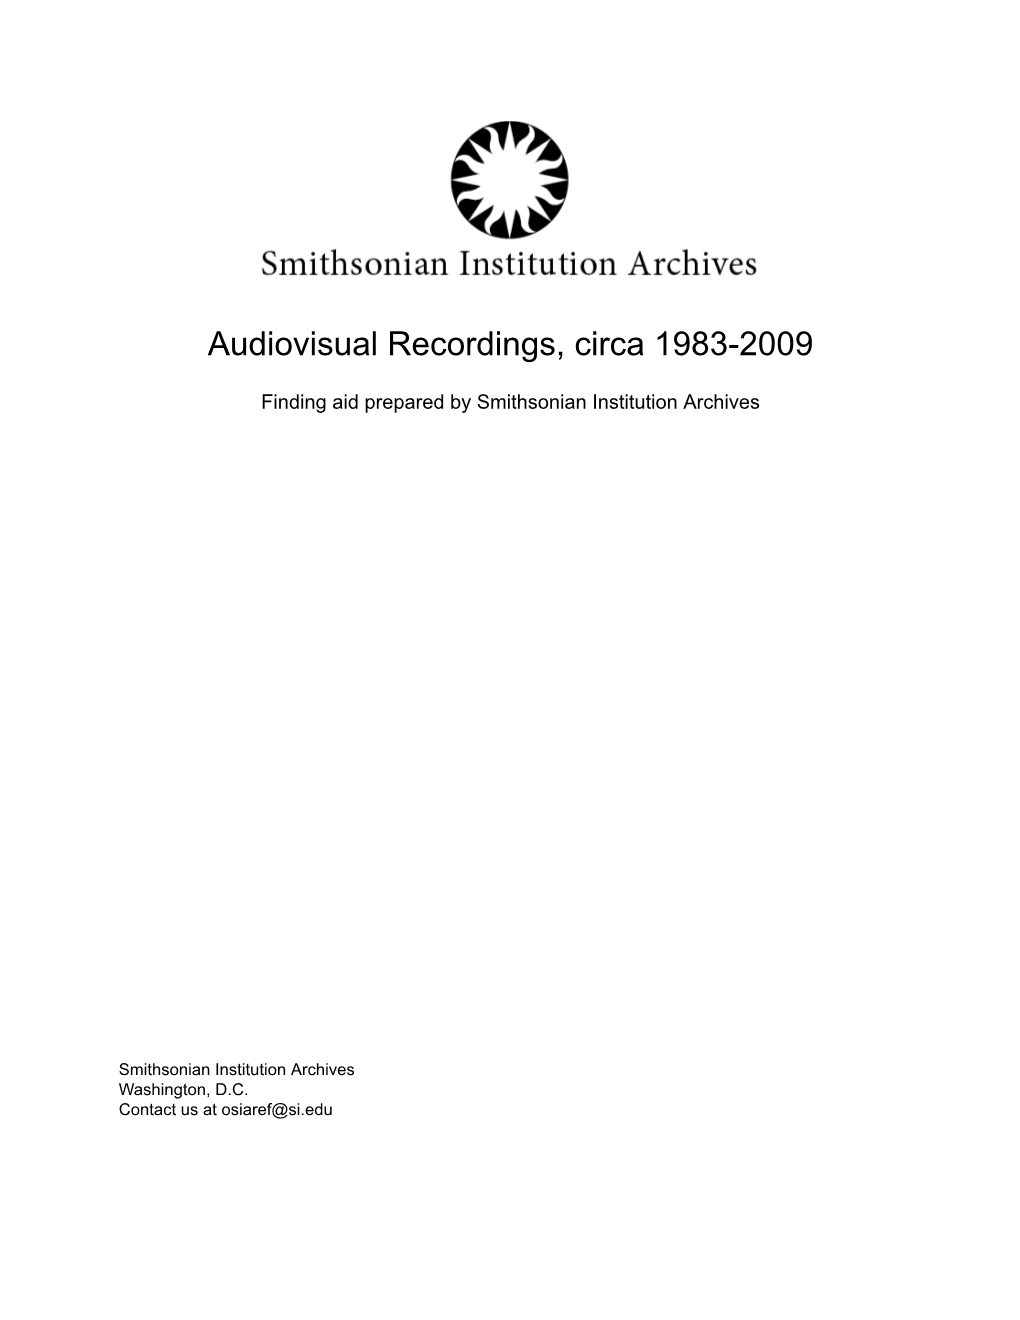 Audiovisual Recordings, Circa 1983-2009